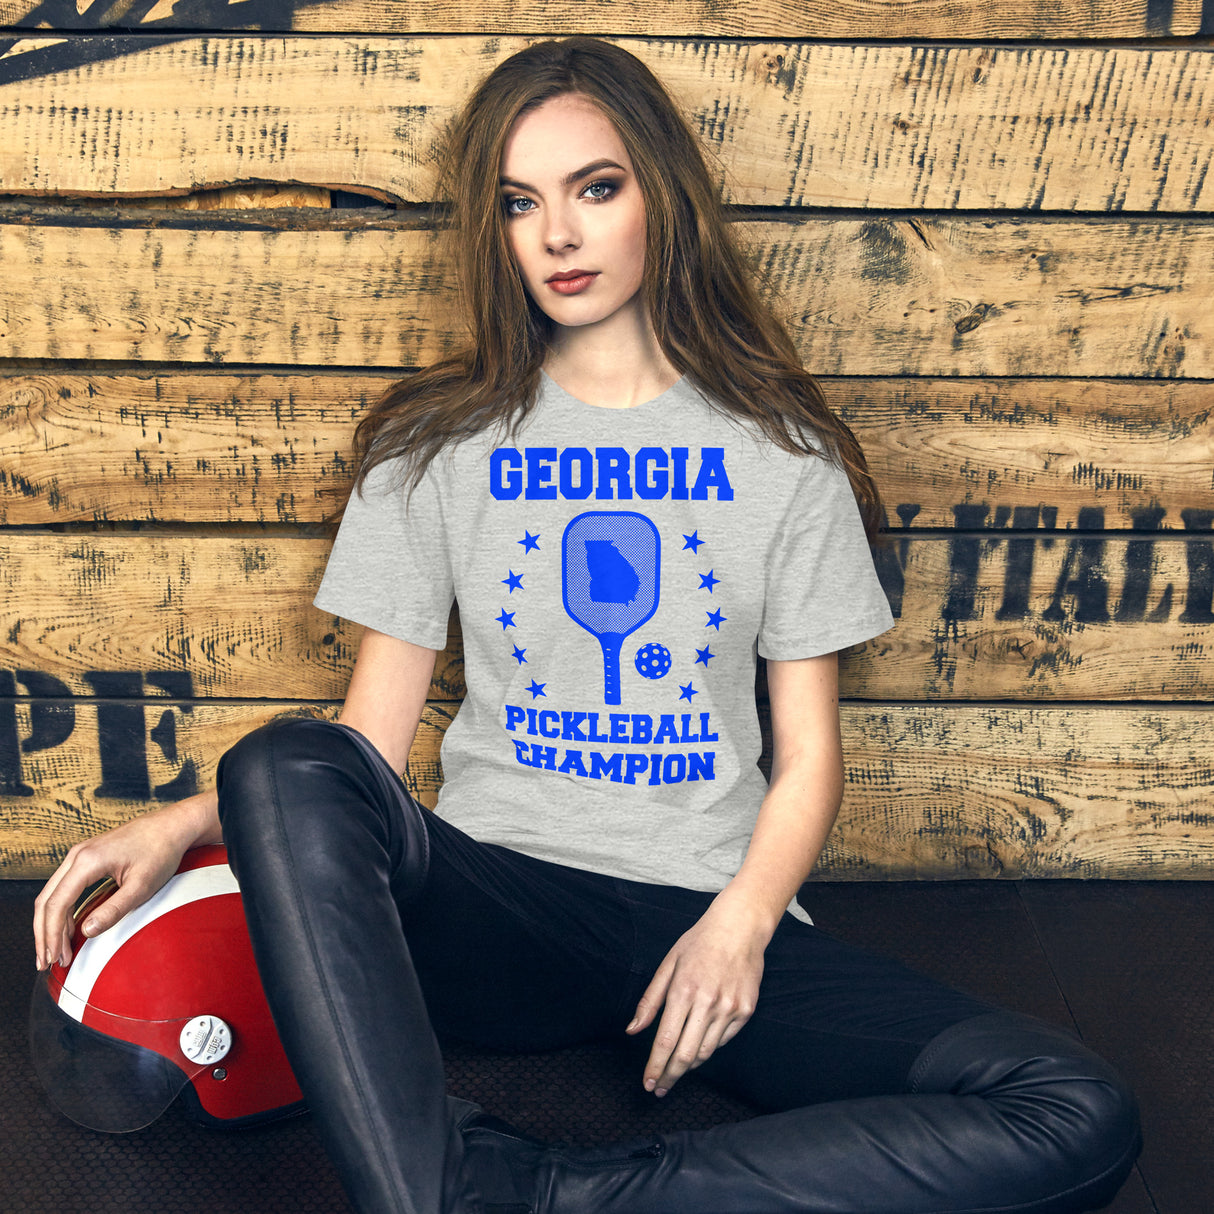 Georgia Pickleball Champion Women's Shirt